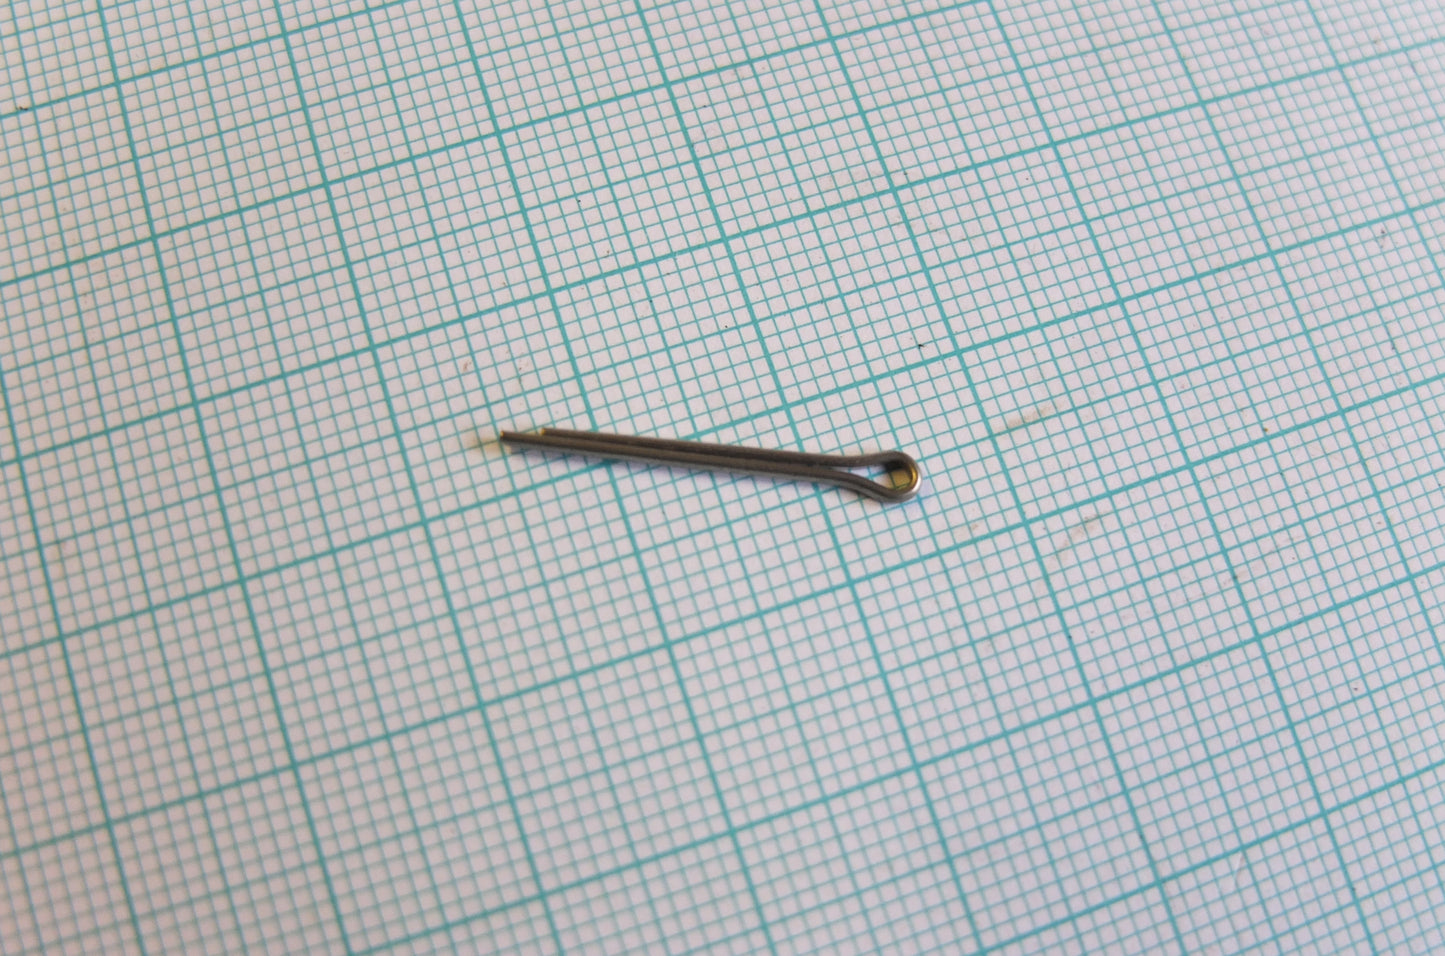 P4/128 Split pin